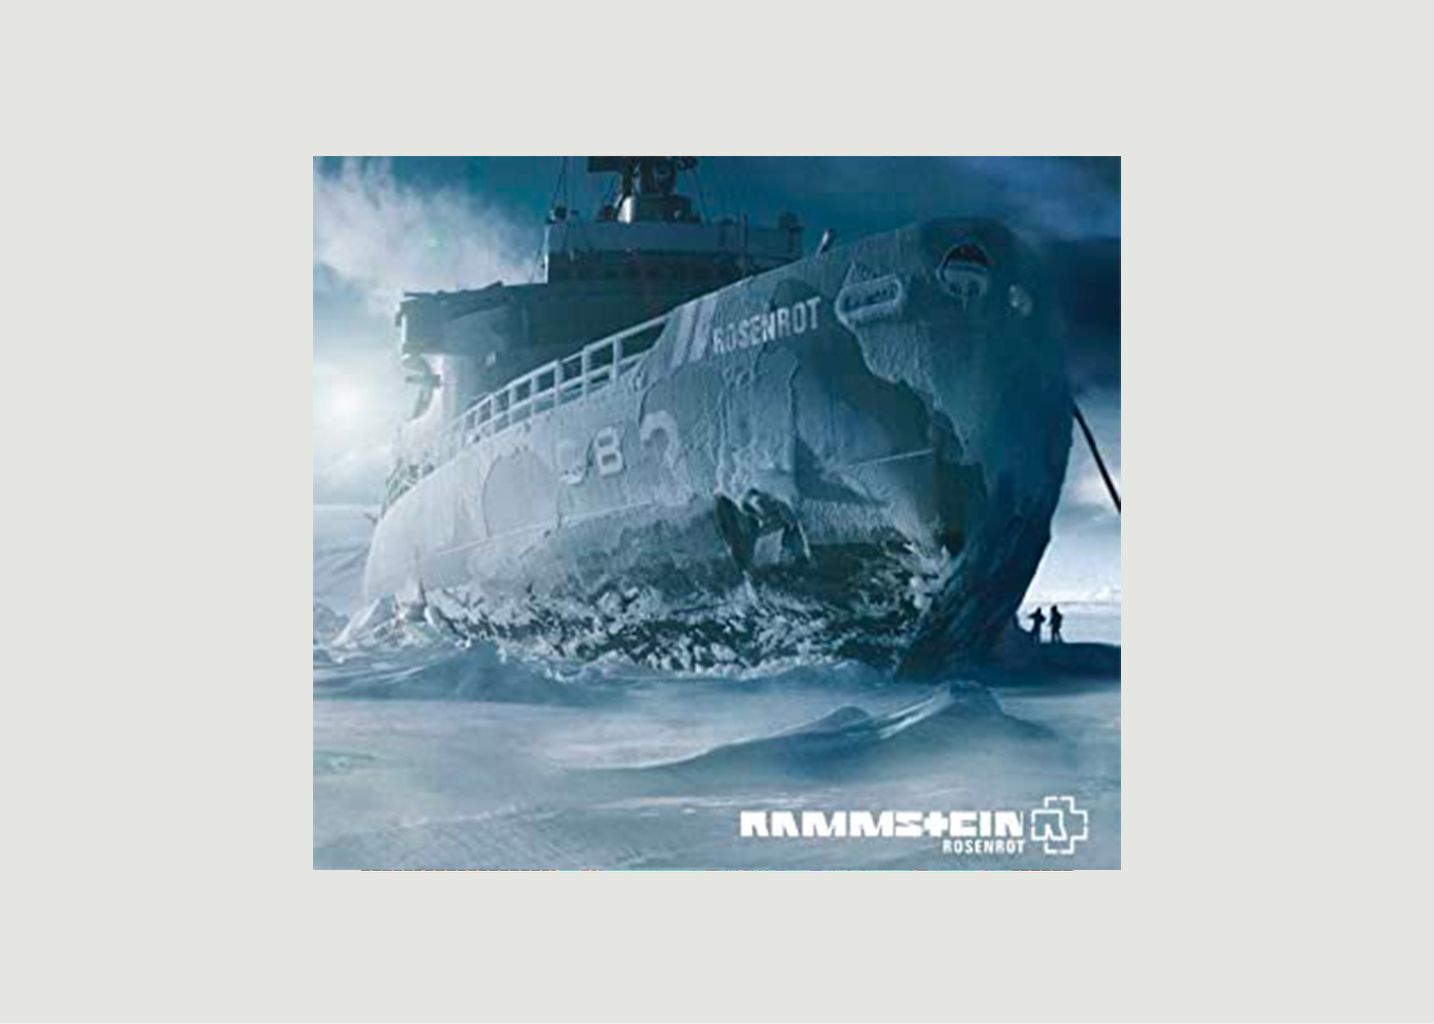 Vinyl Rosenrot Rammstein - La vinyl-thèque idéale